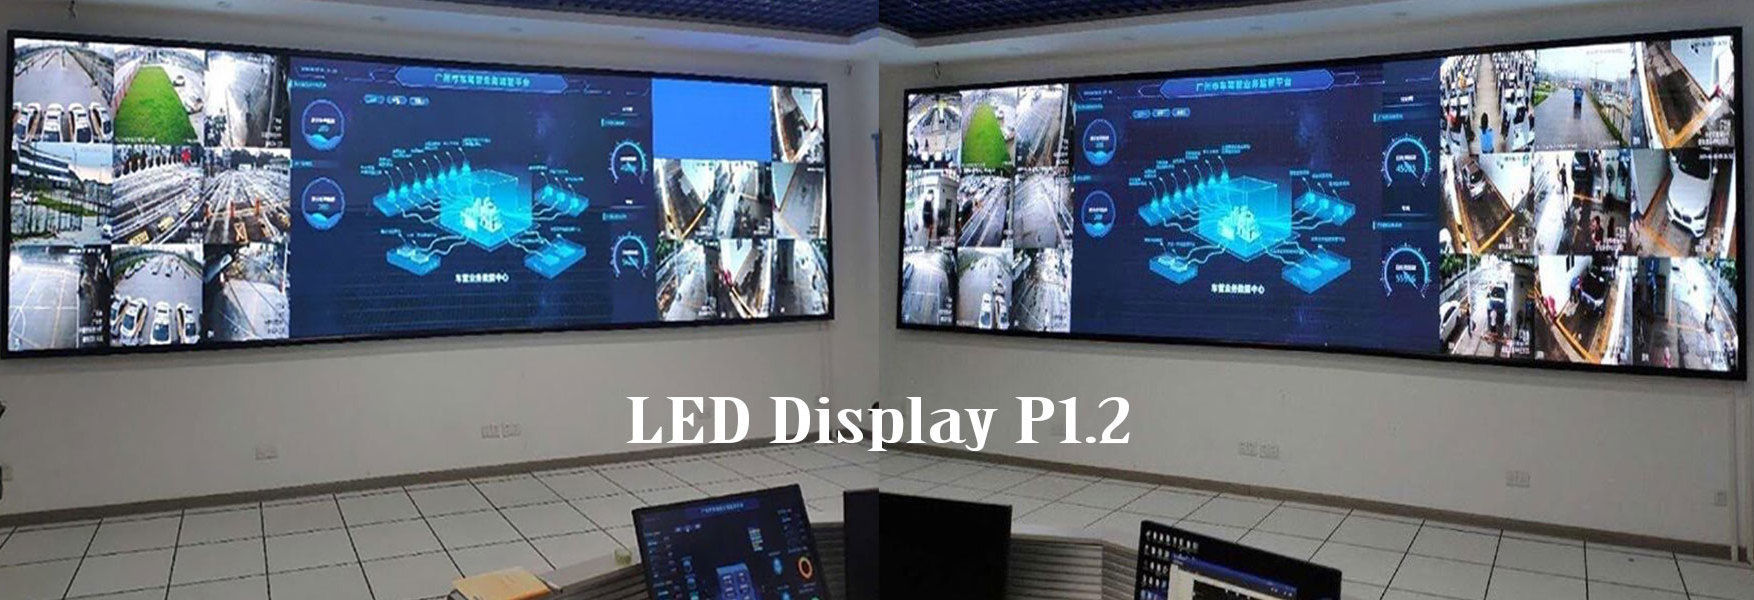 LED Display P1.2 